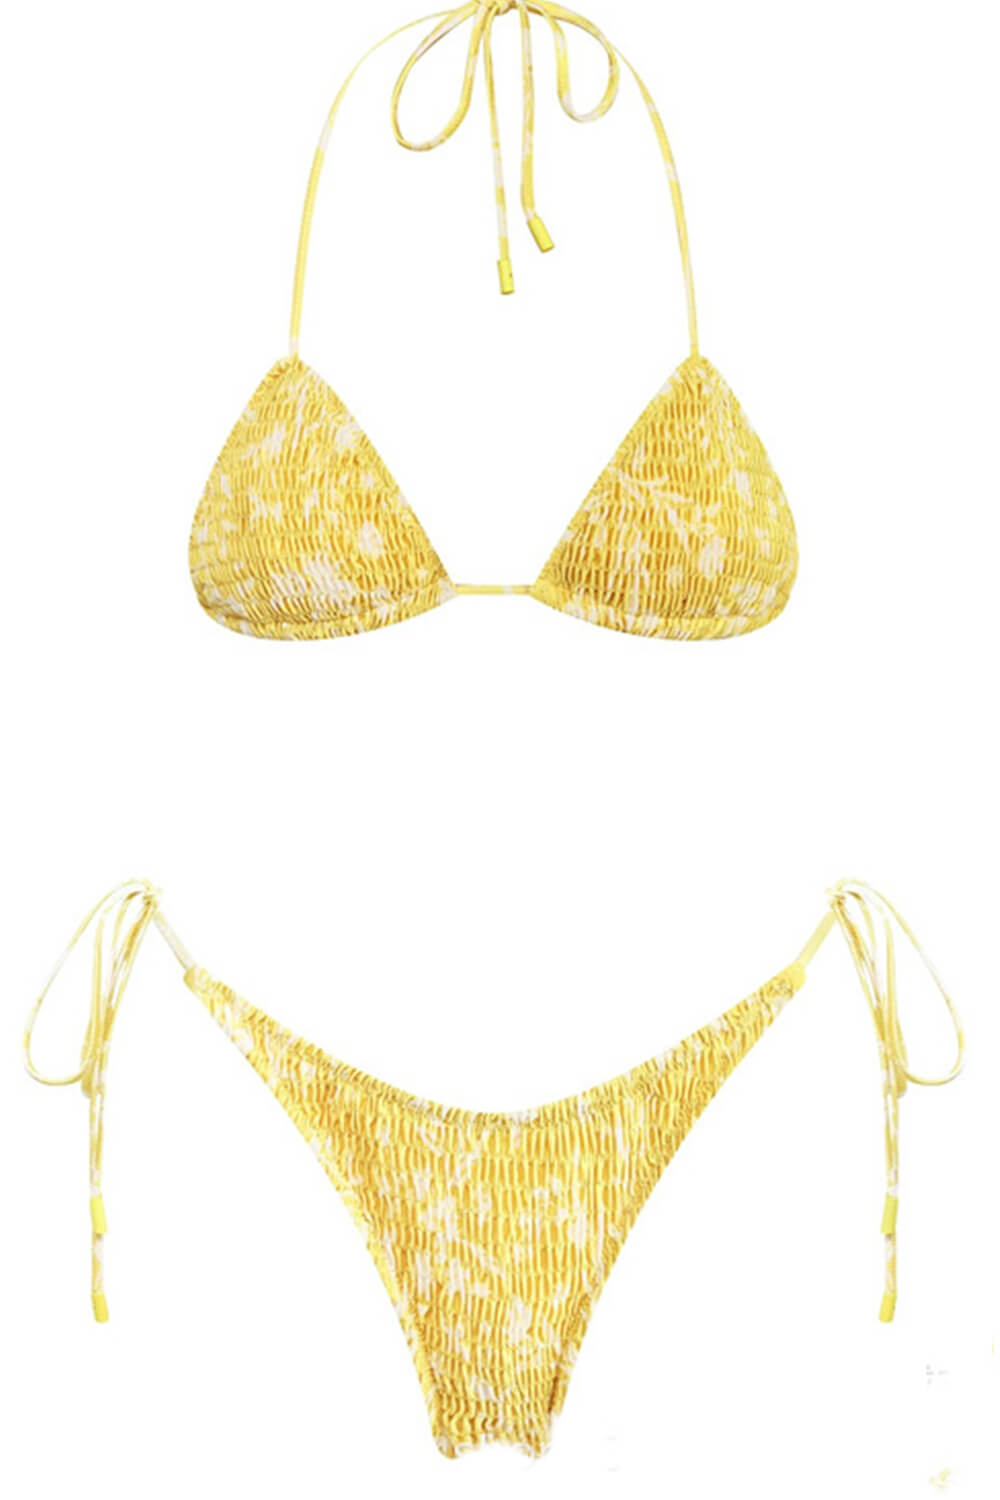 Yellow Floral Crinkle Halter Tie Side Bikini Set